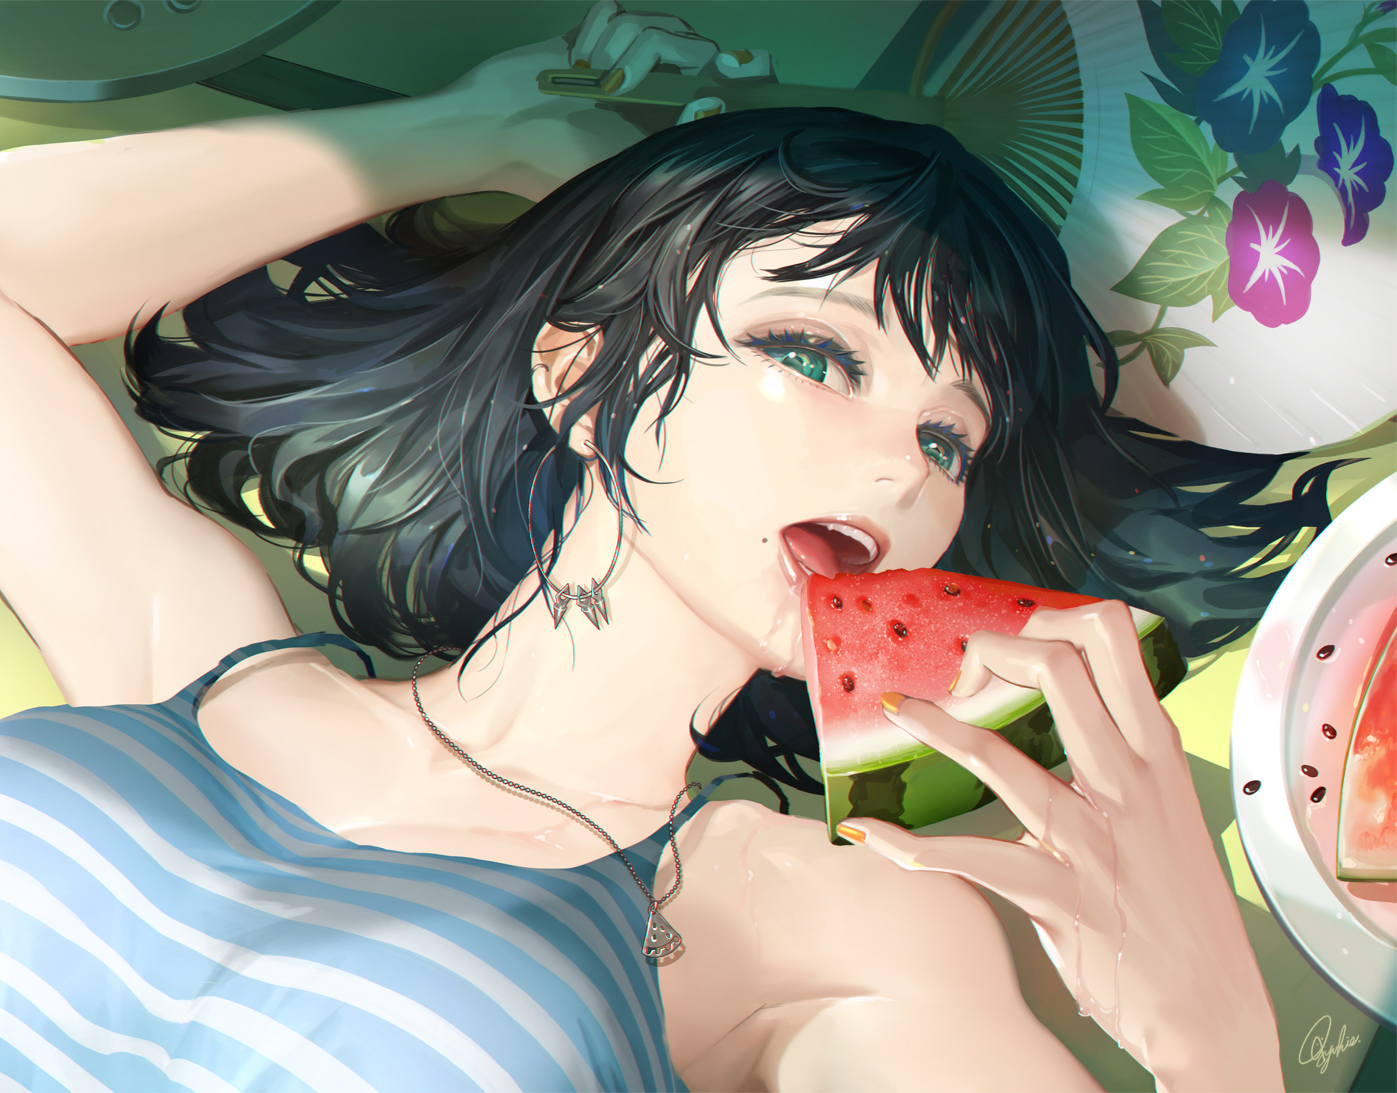 Anime 1397x1093 anime anime girls black hair dark hair green eyes necklace watermelons eating hand fan Tajima Yukie